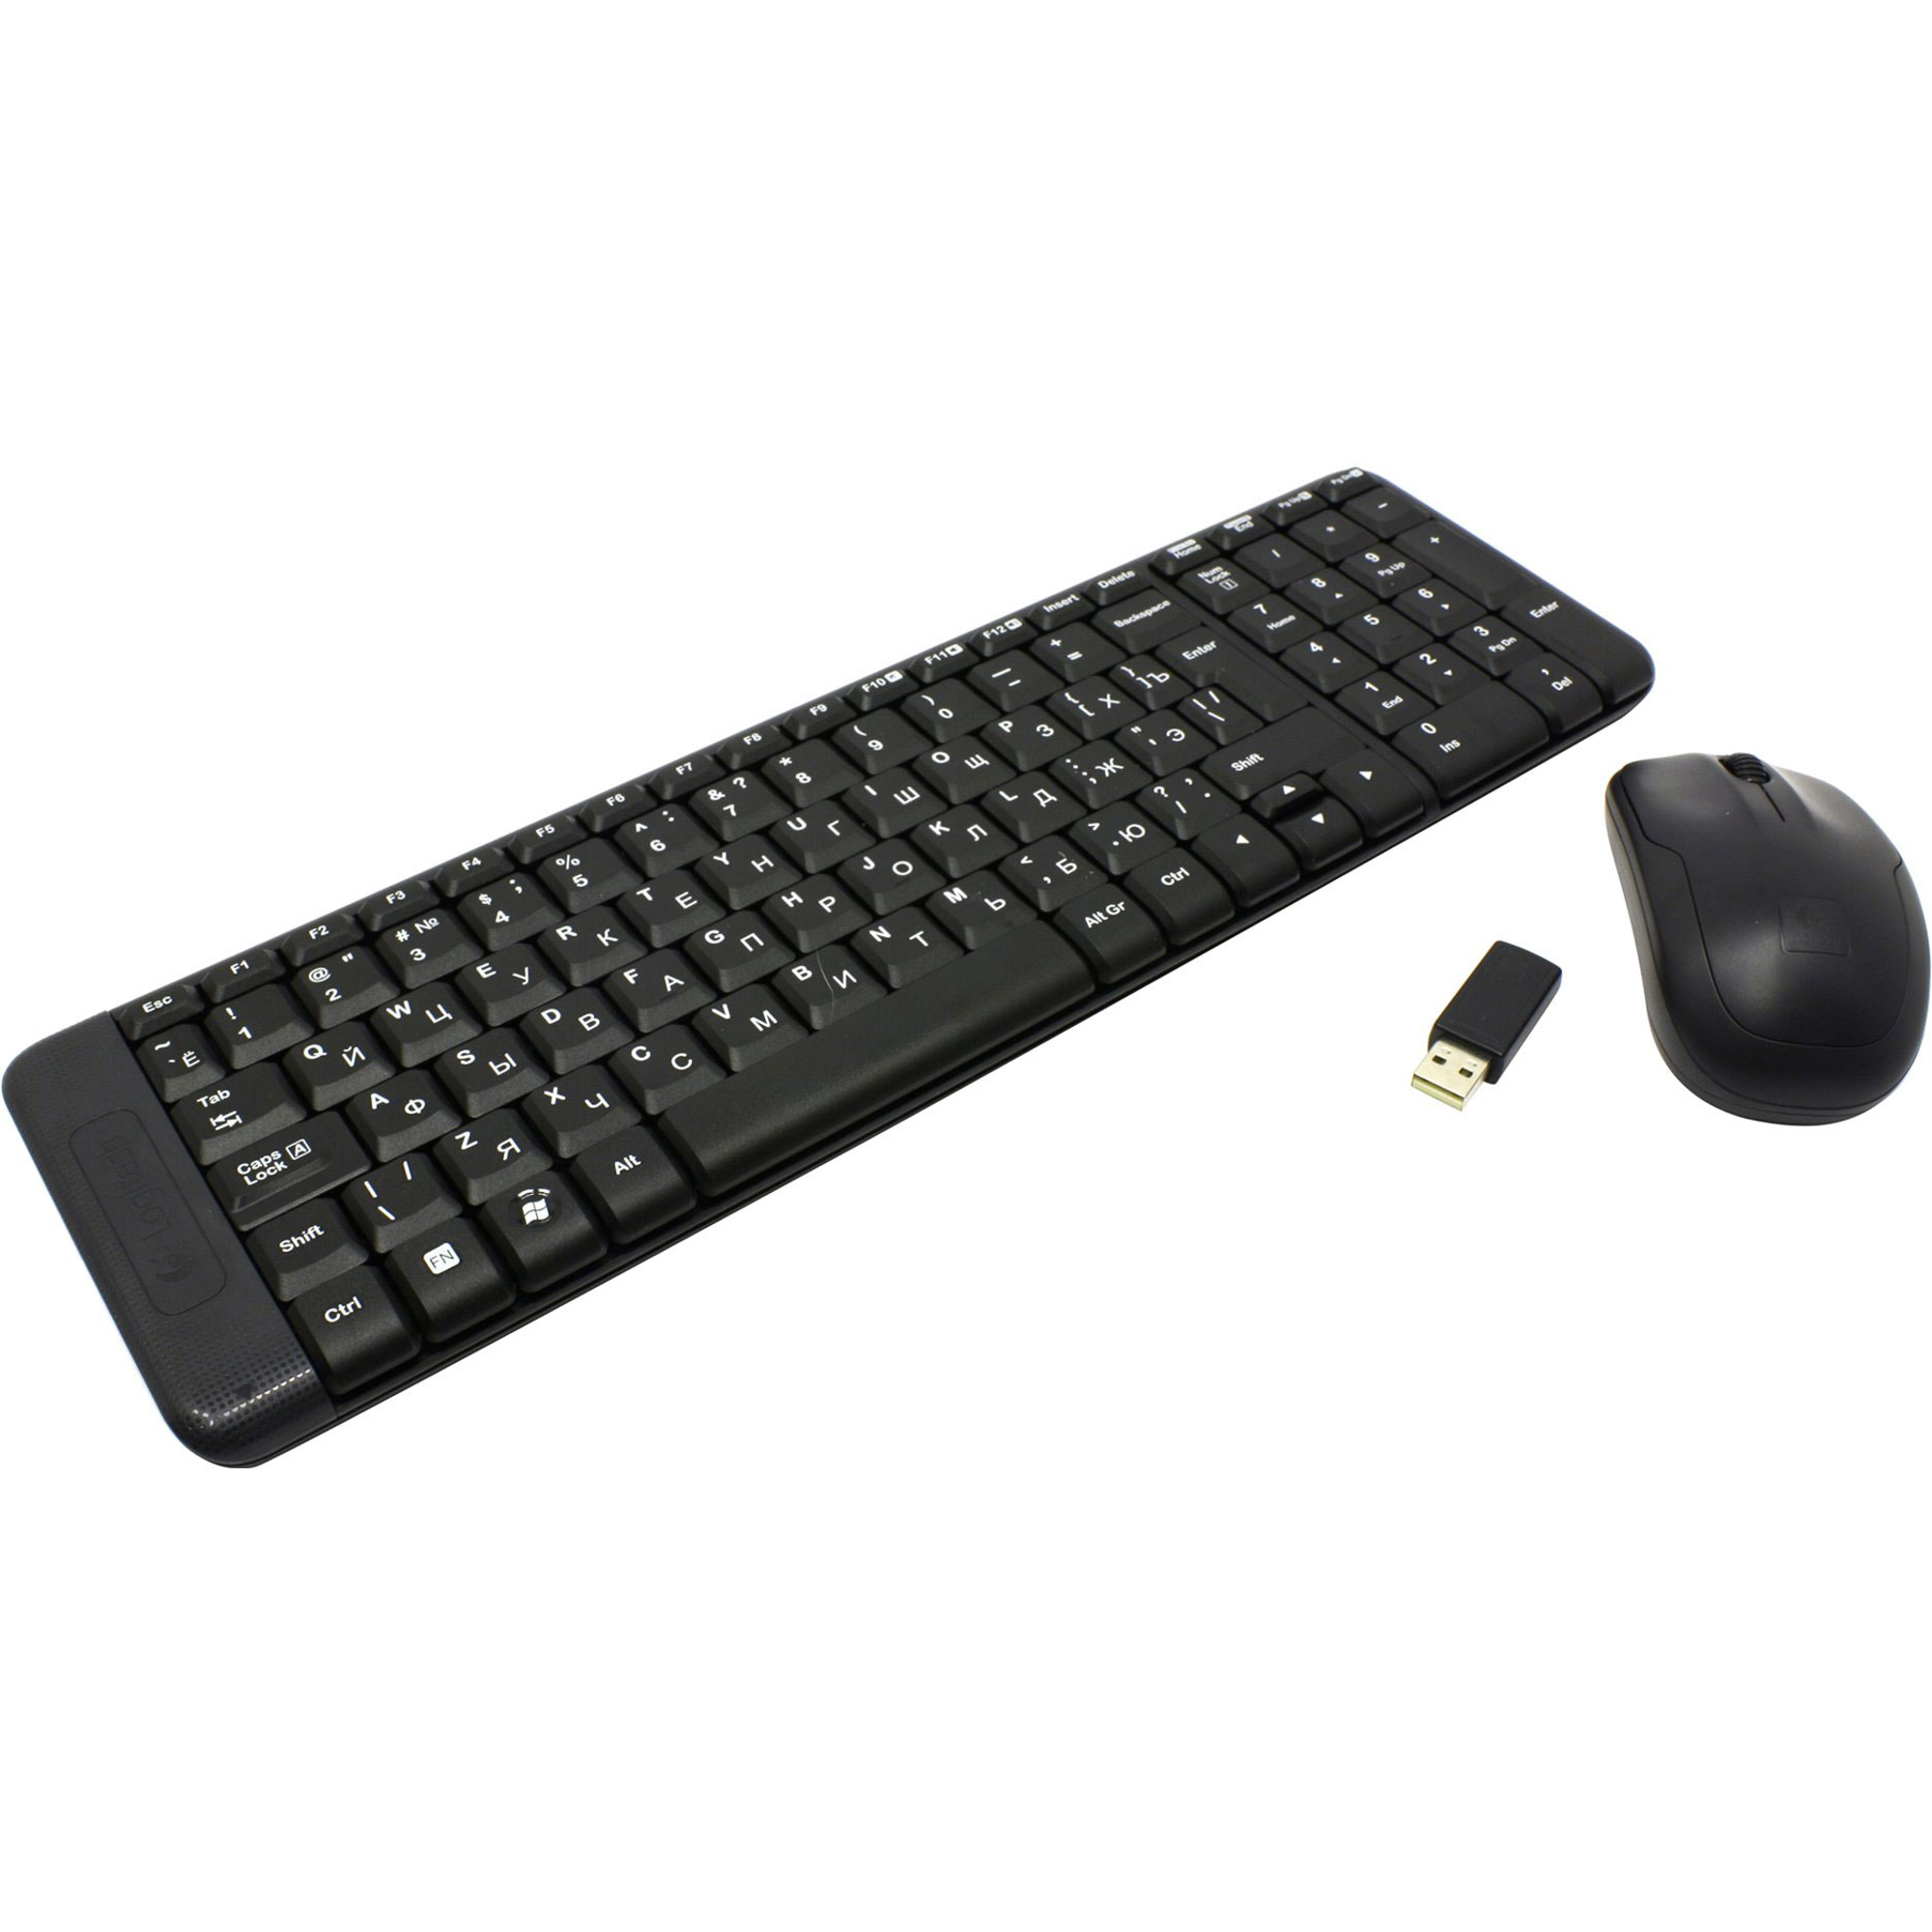 Комплект клавиатура + мышь Logitech Wireless Desktop MK220 набор клавиатура мышь logitech mk330 black